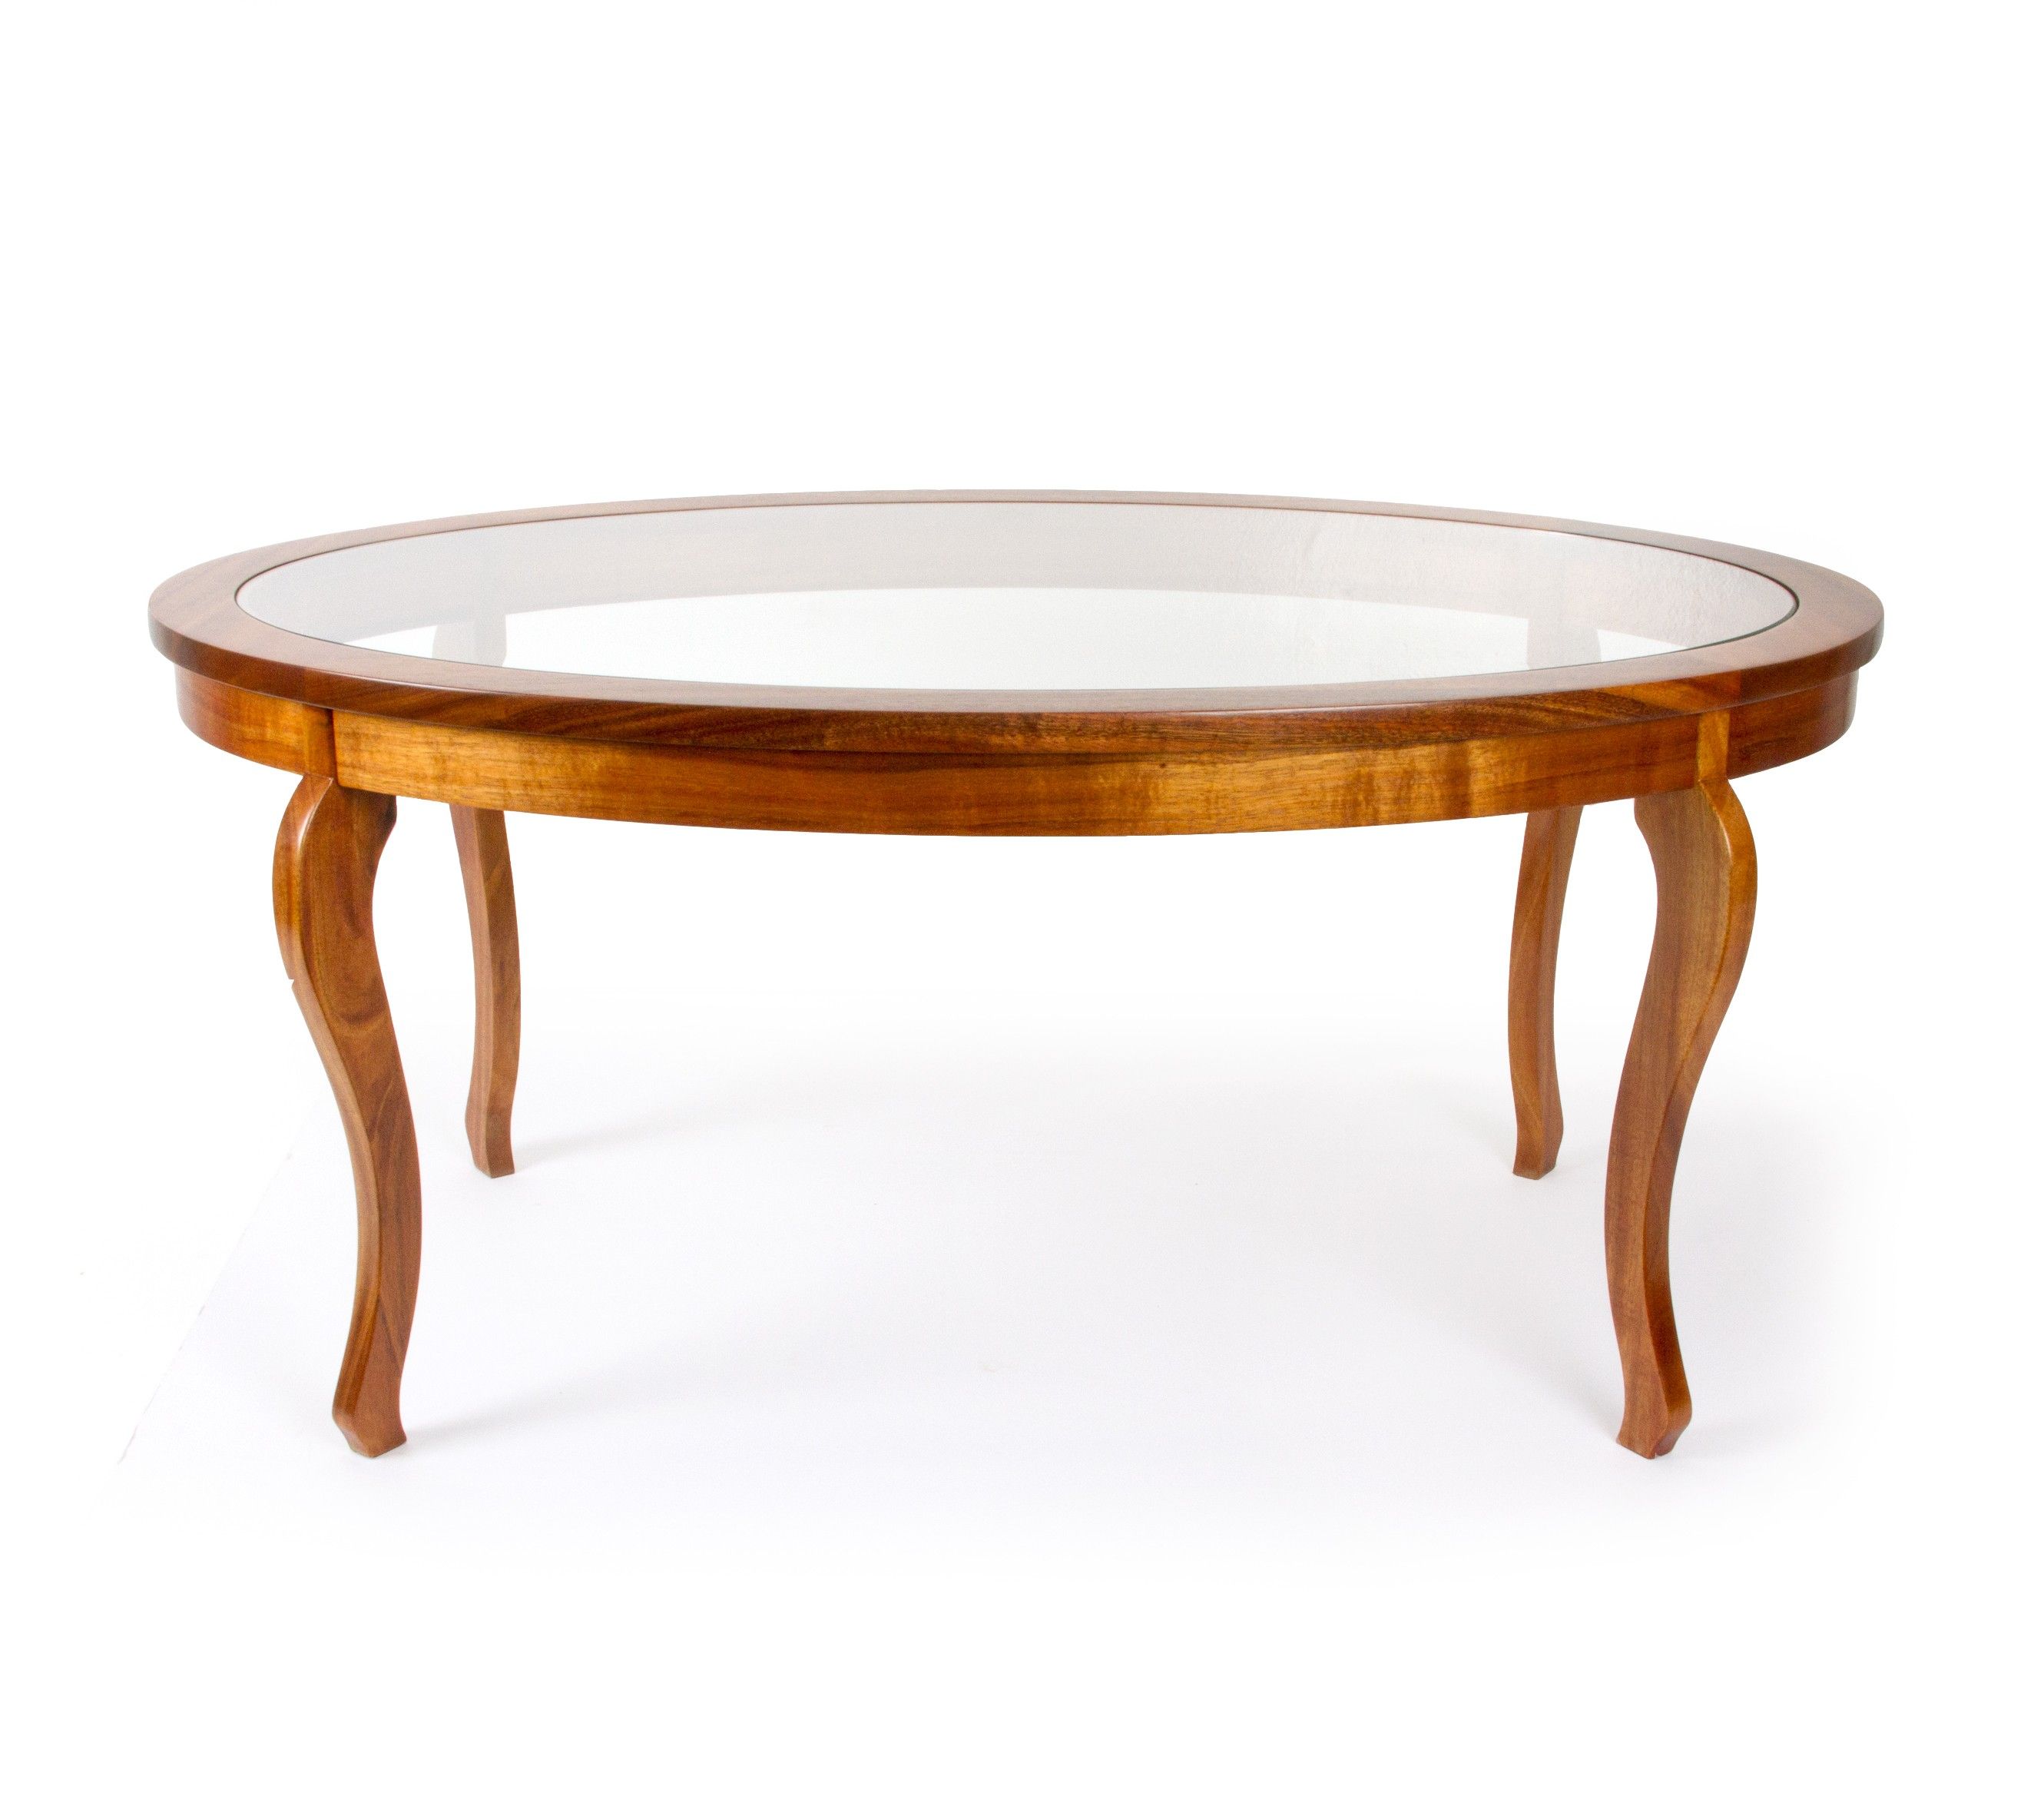 Modern Oak Coffee Table Designs Modern Design Sofa Table Beautiful Interior Furniture Design Contemporary Wooden (View 3 of 10)